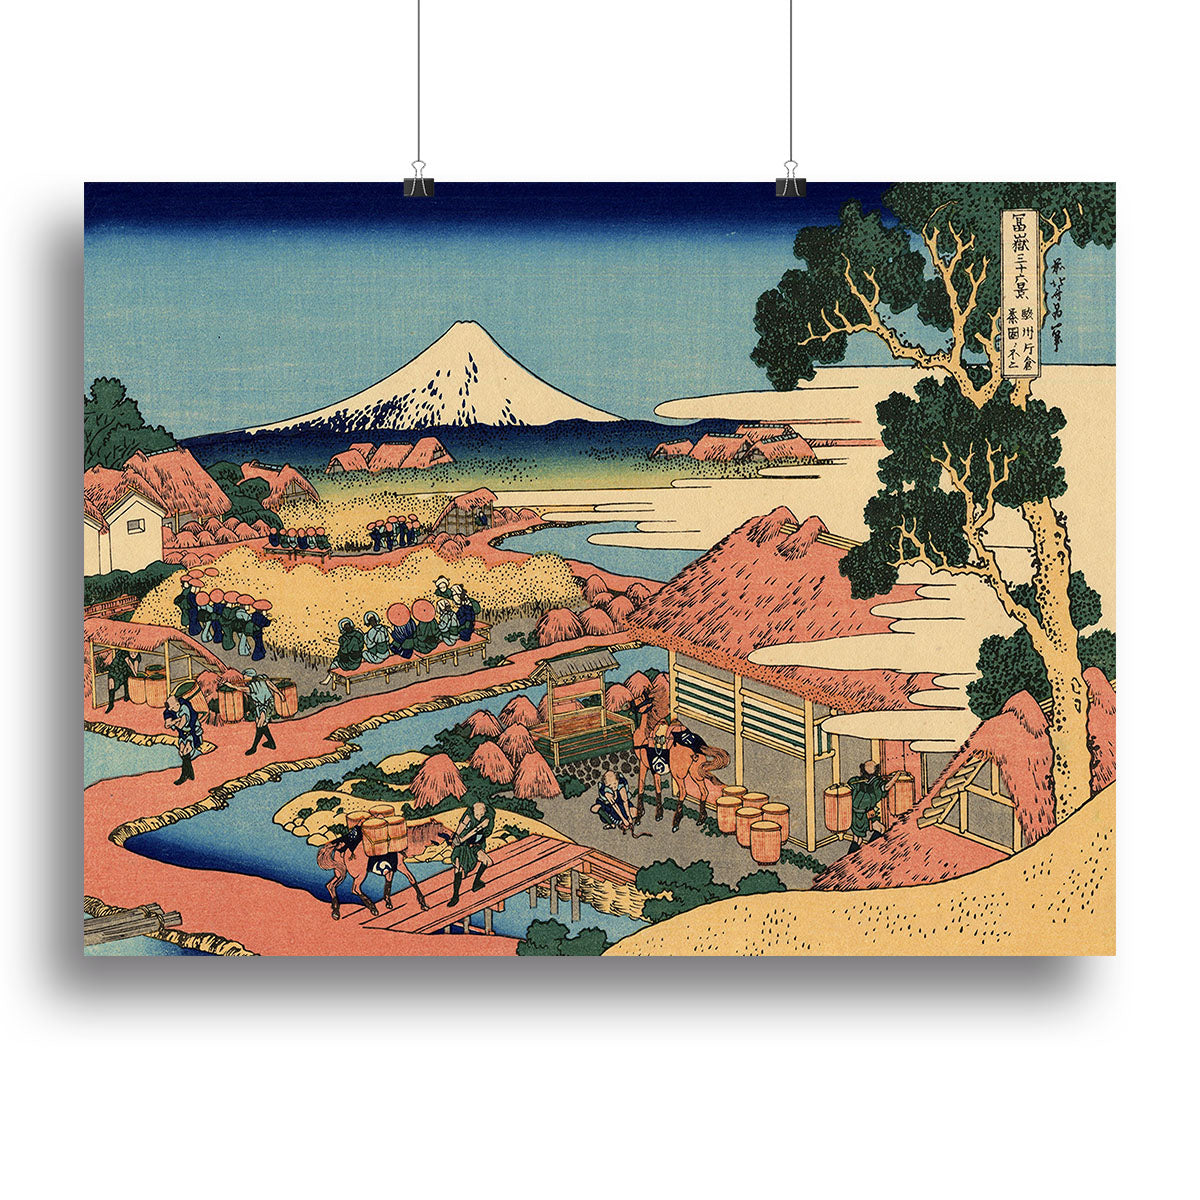 The Tea plantation by Hokusai Canvas Print or Poster - Canvas Art Rocks - 2